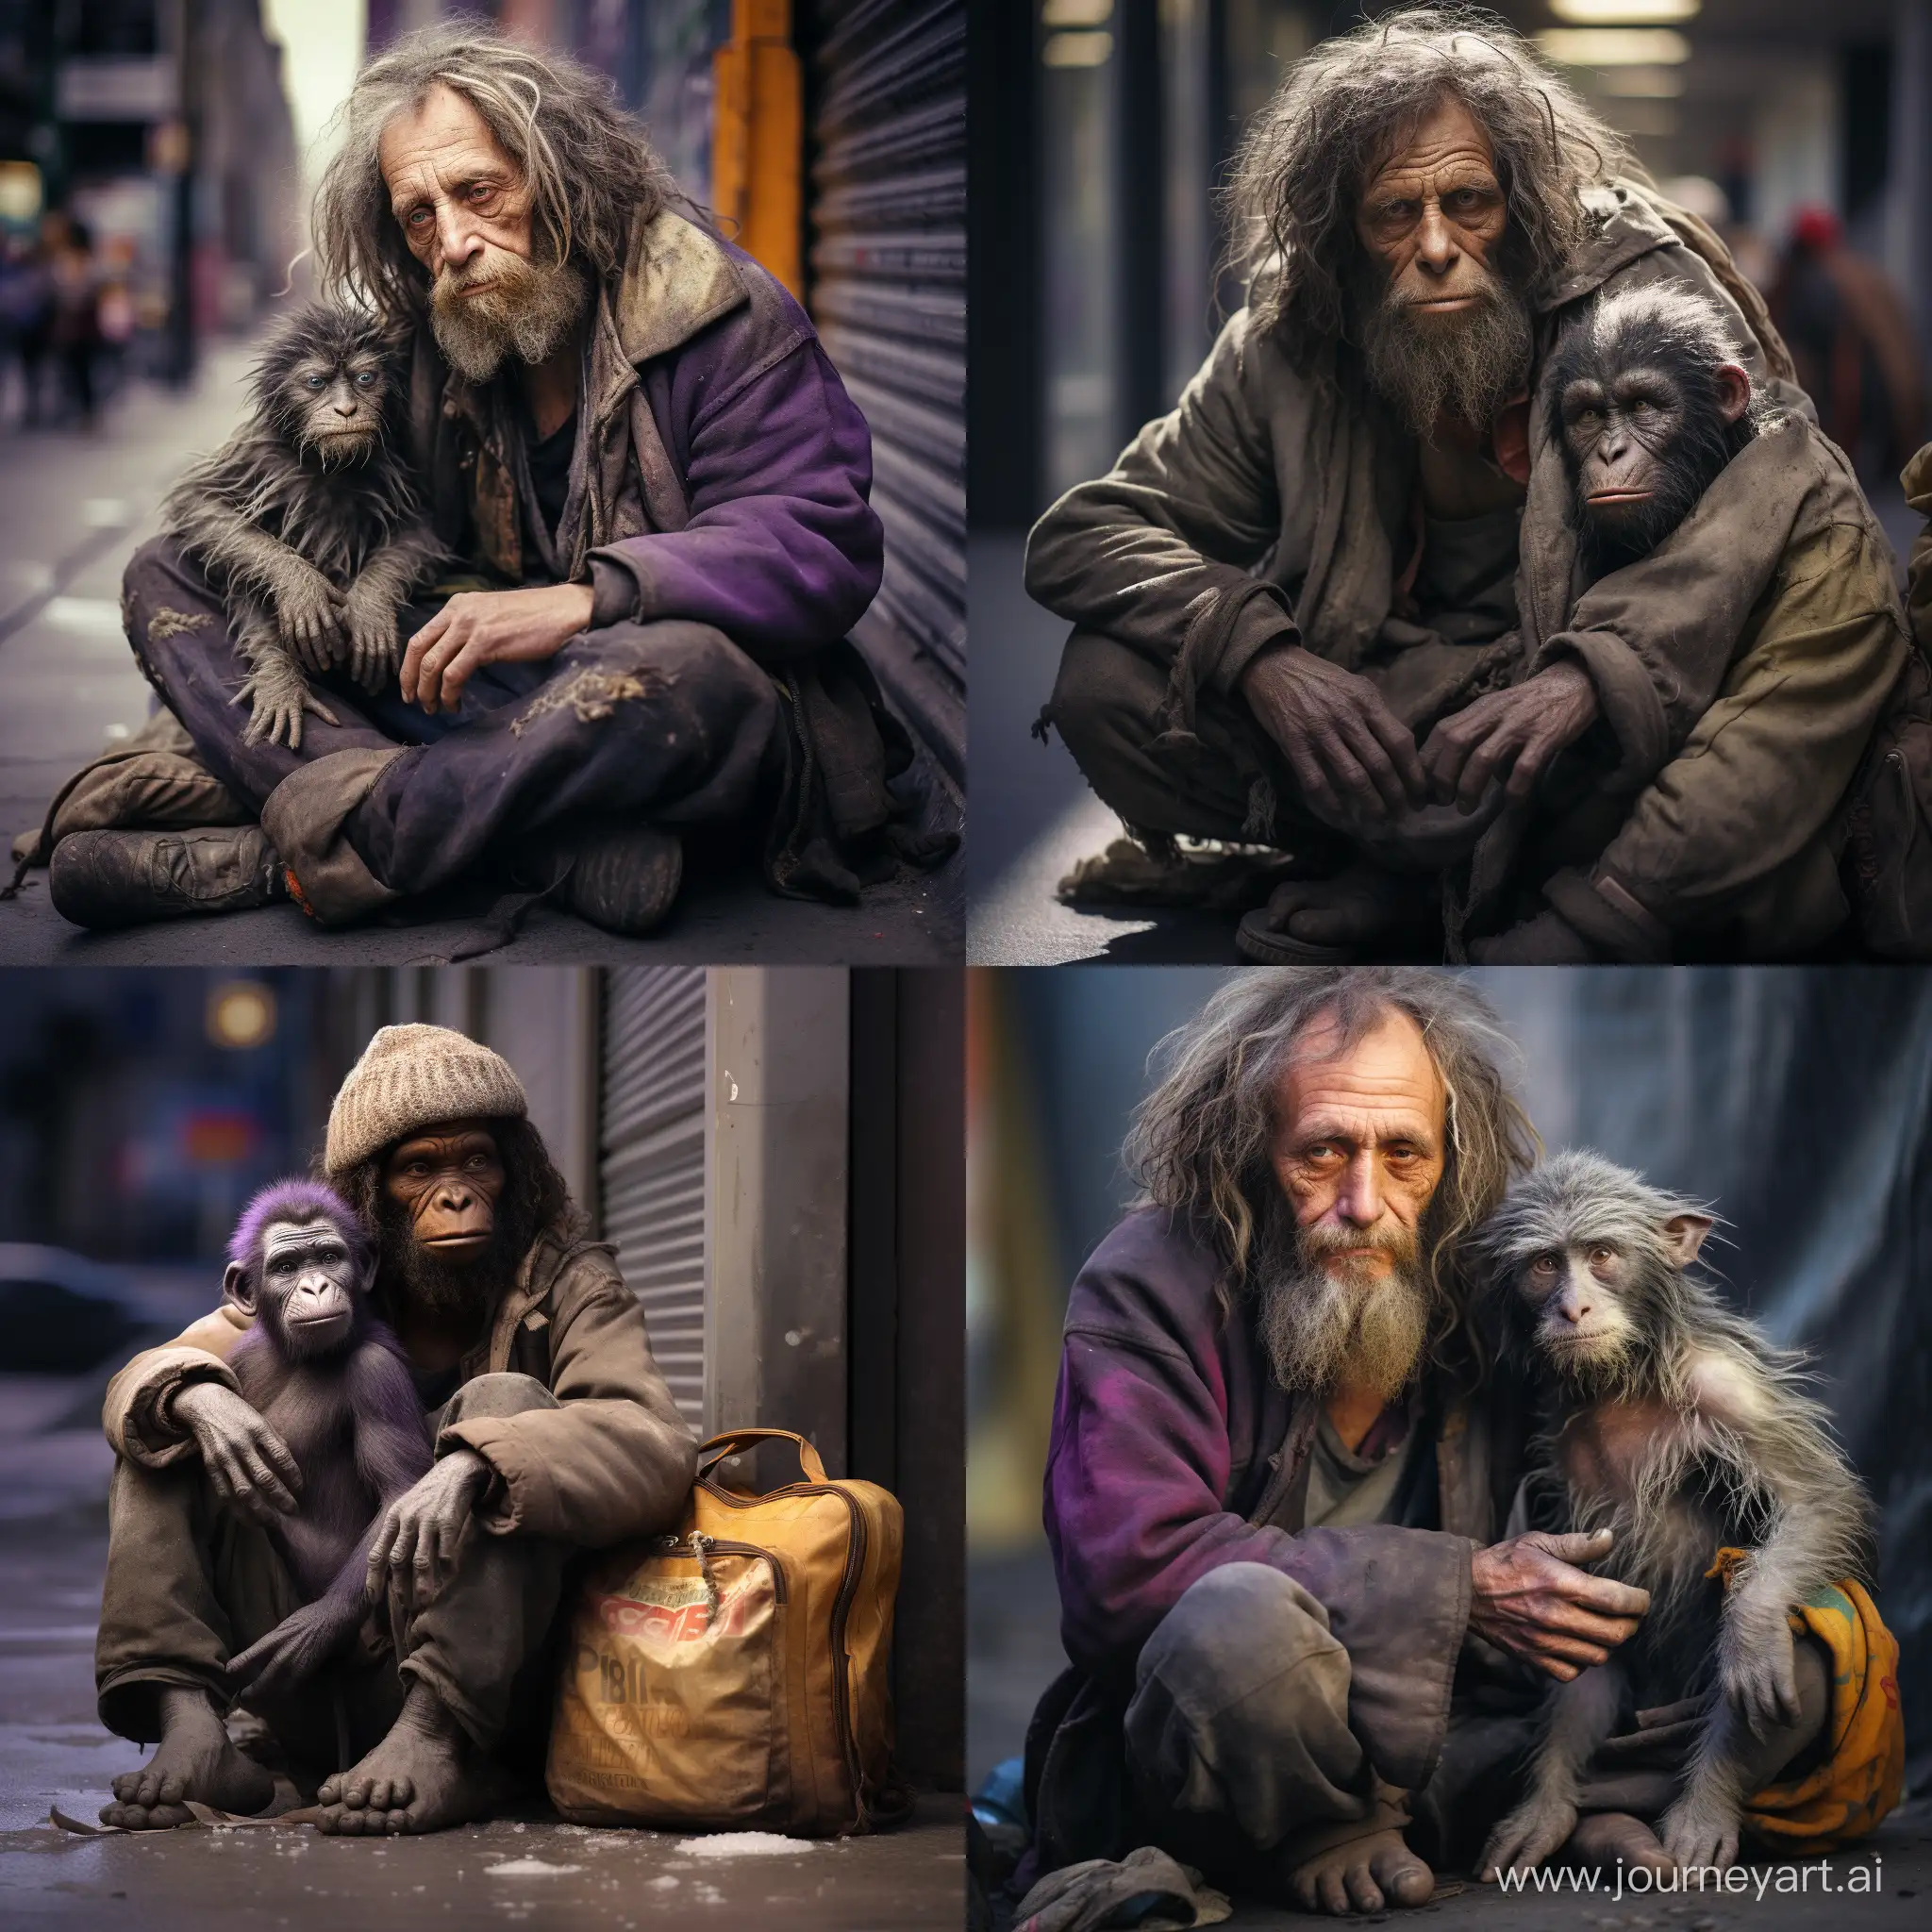 Sympathetic-Bonzi-Buddy-Homeless-Vagrant-Begging